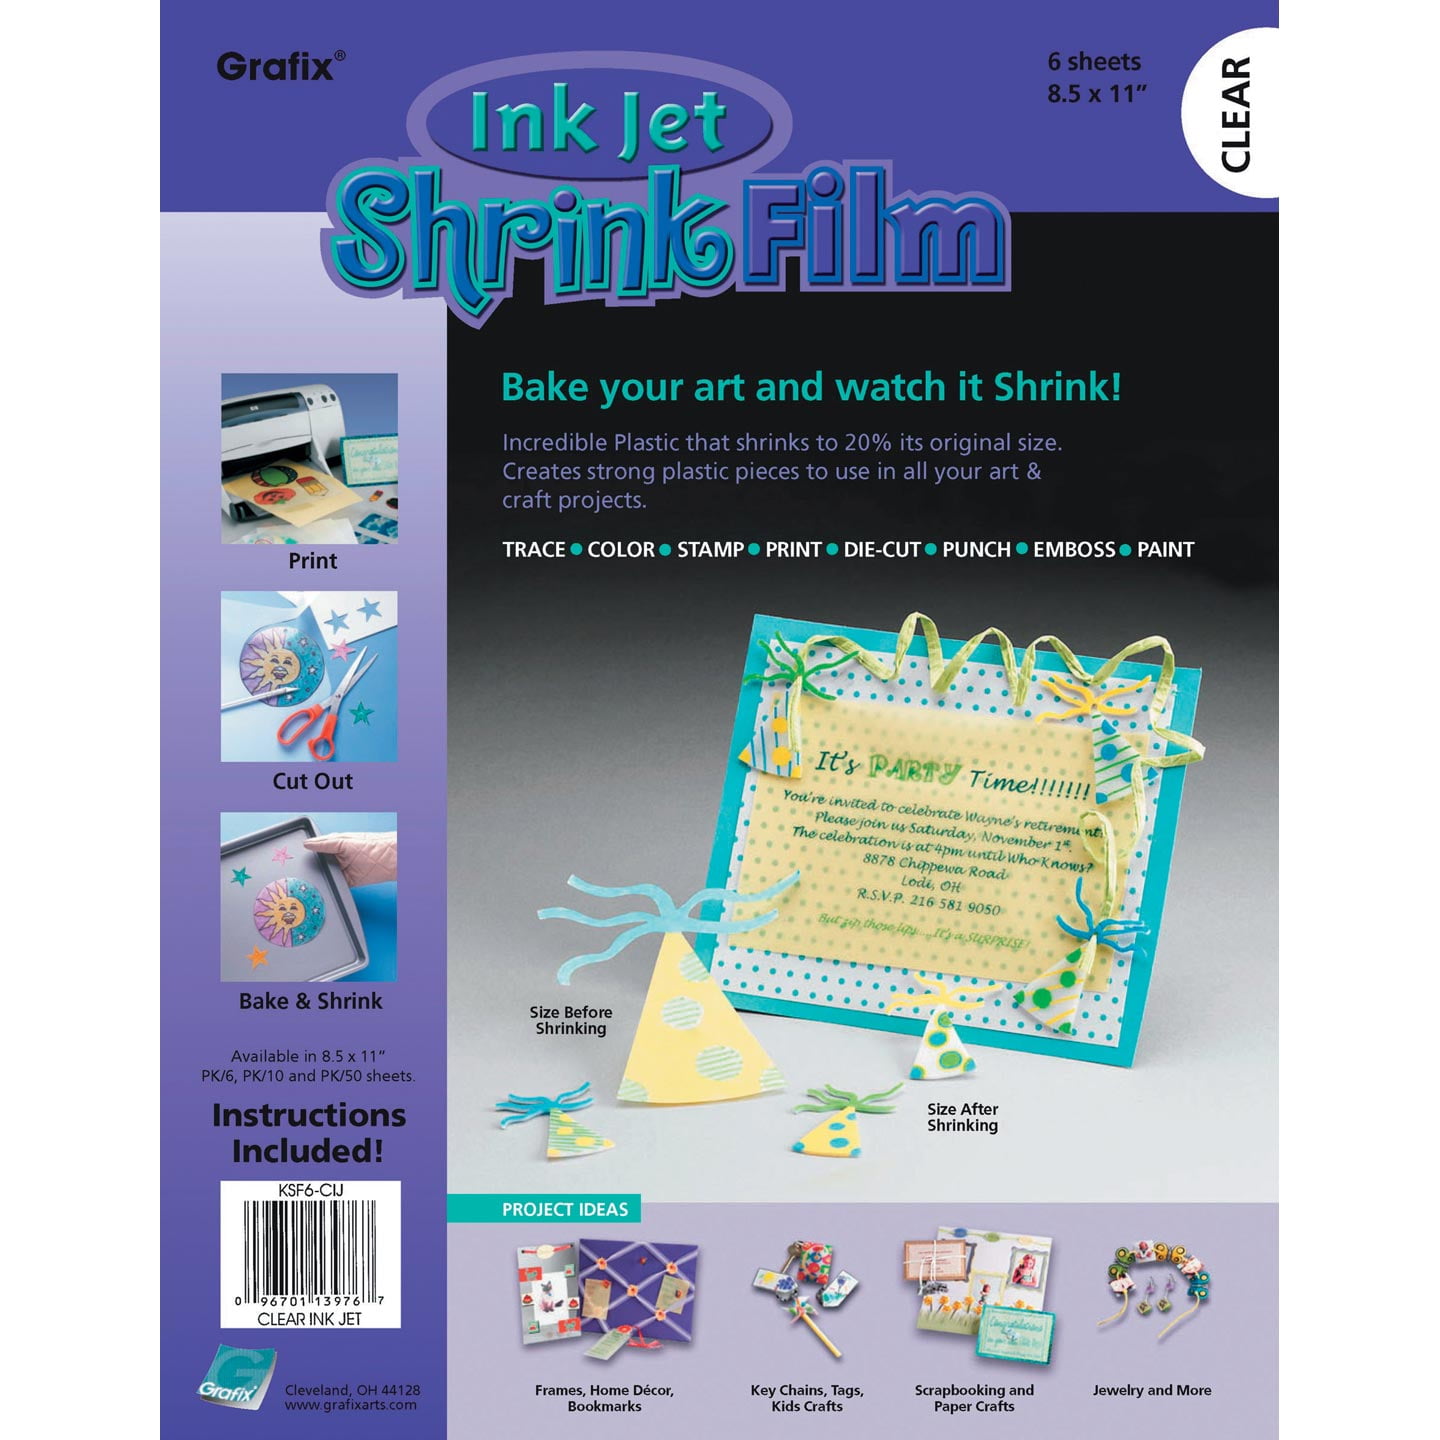 How to Use Grafix Inkjet Printable Shrink Plastic – The 12x12 Cardstock Shop